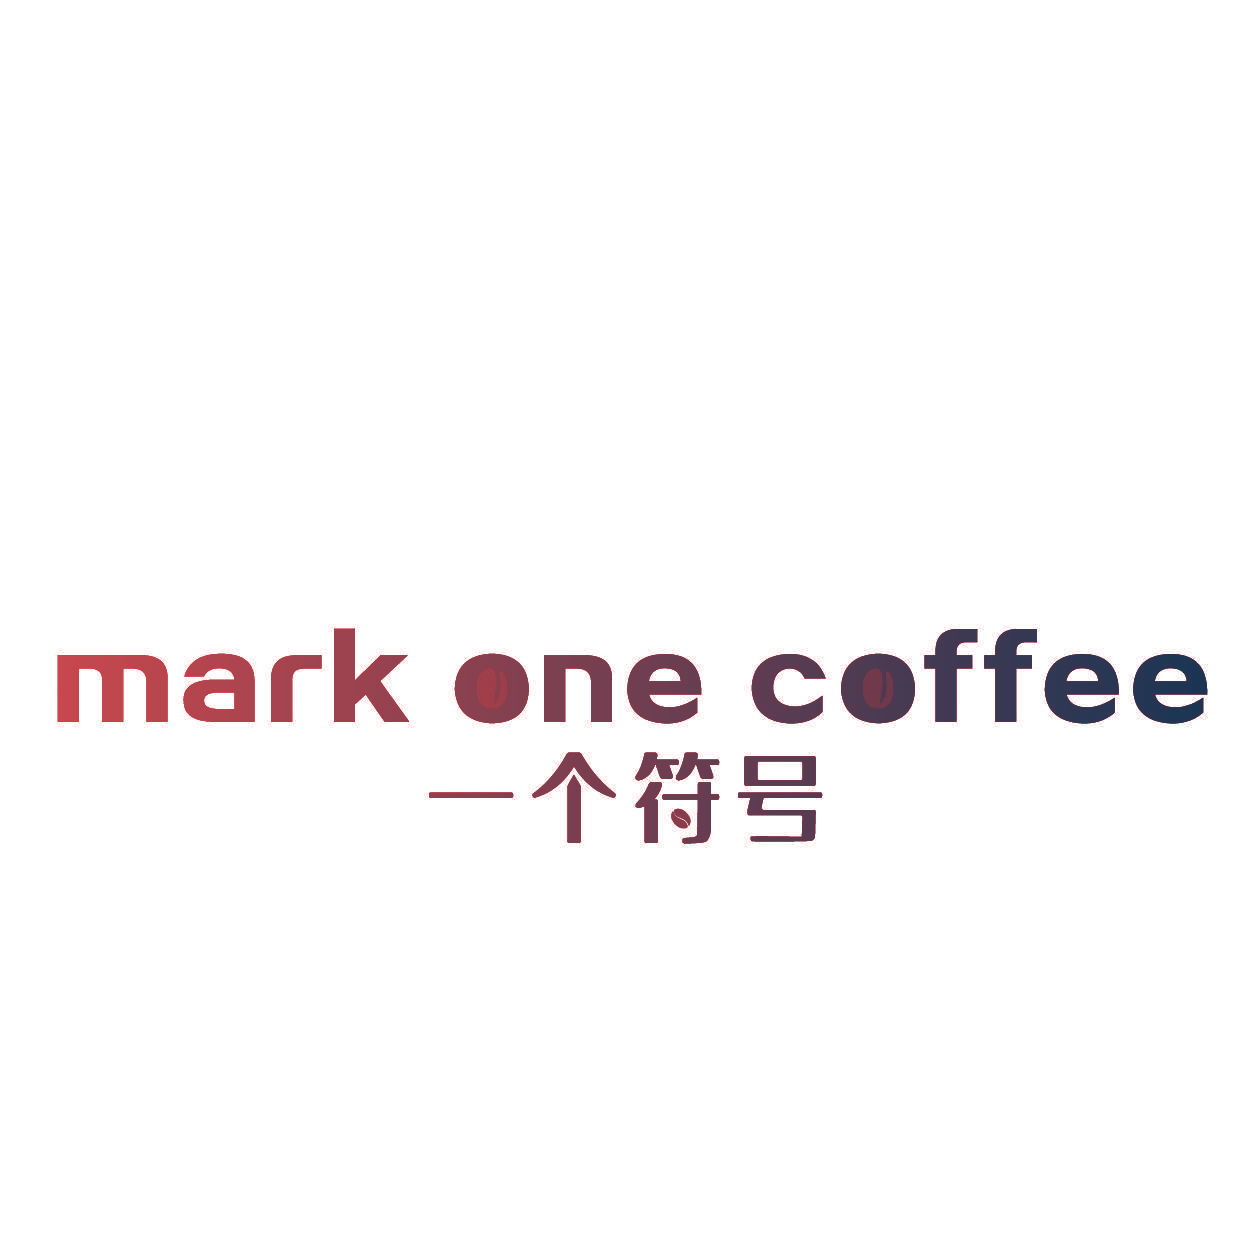 MARK ONE COFFEE 一个符号